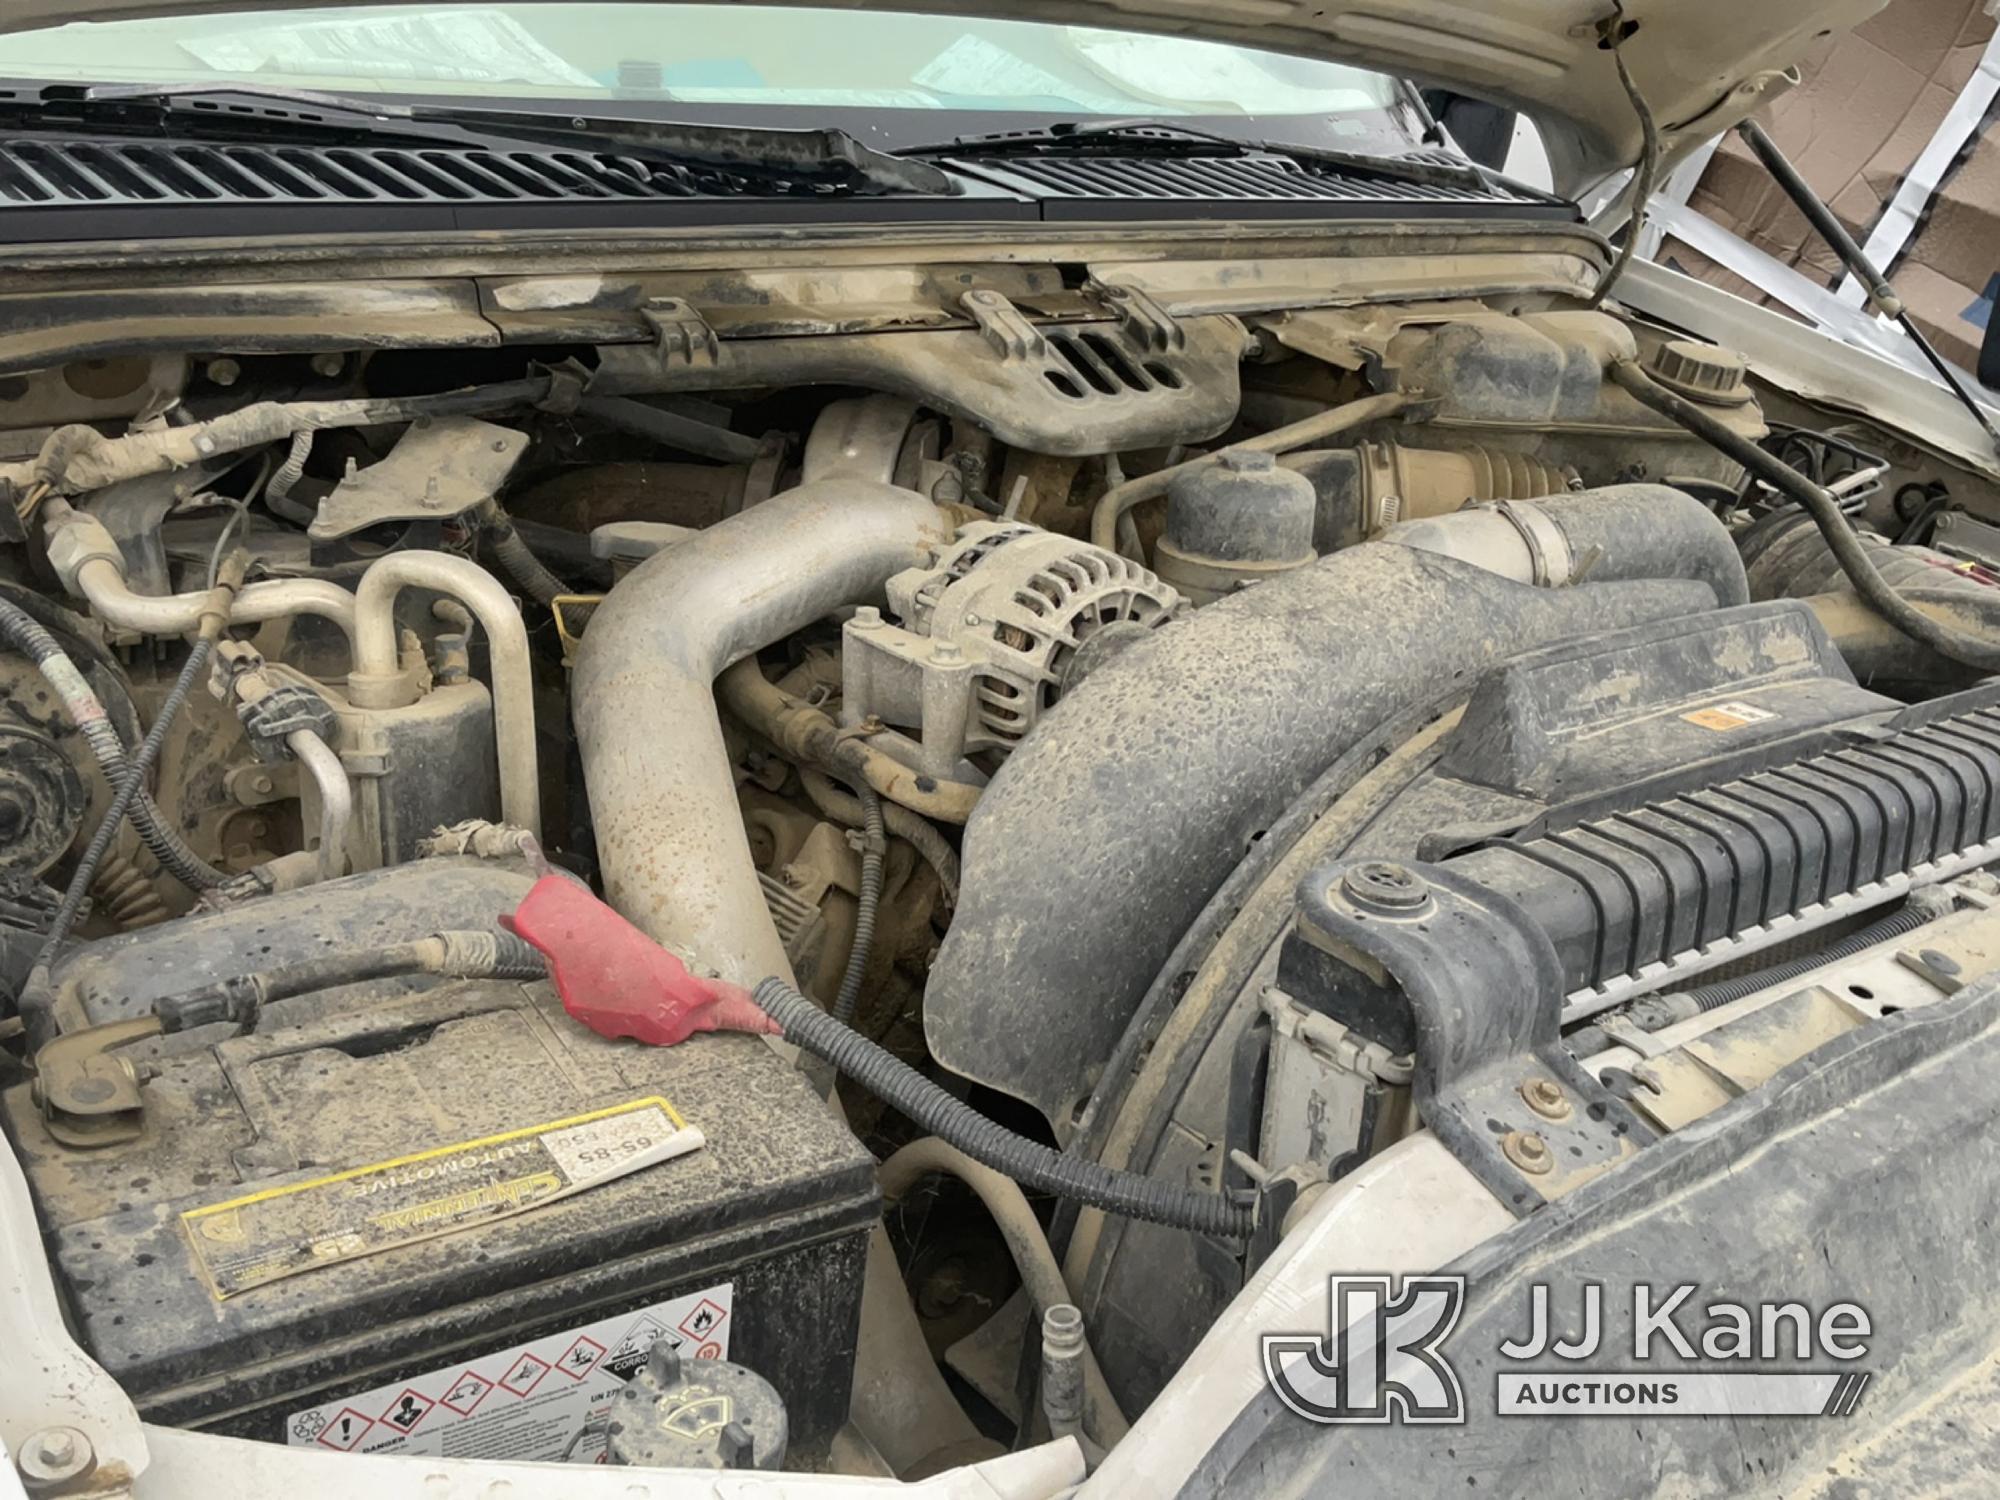 (Jurupa Valley, CA) 2005 Ford F450 Utility Truck Not Running, Engine Will Not Turn Over, Interior St